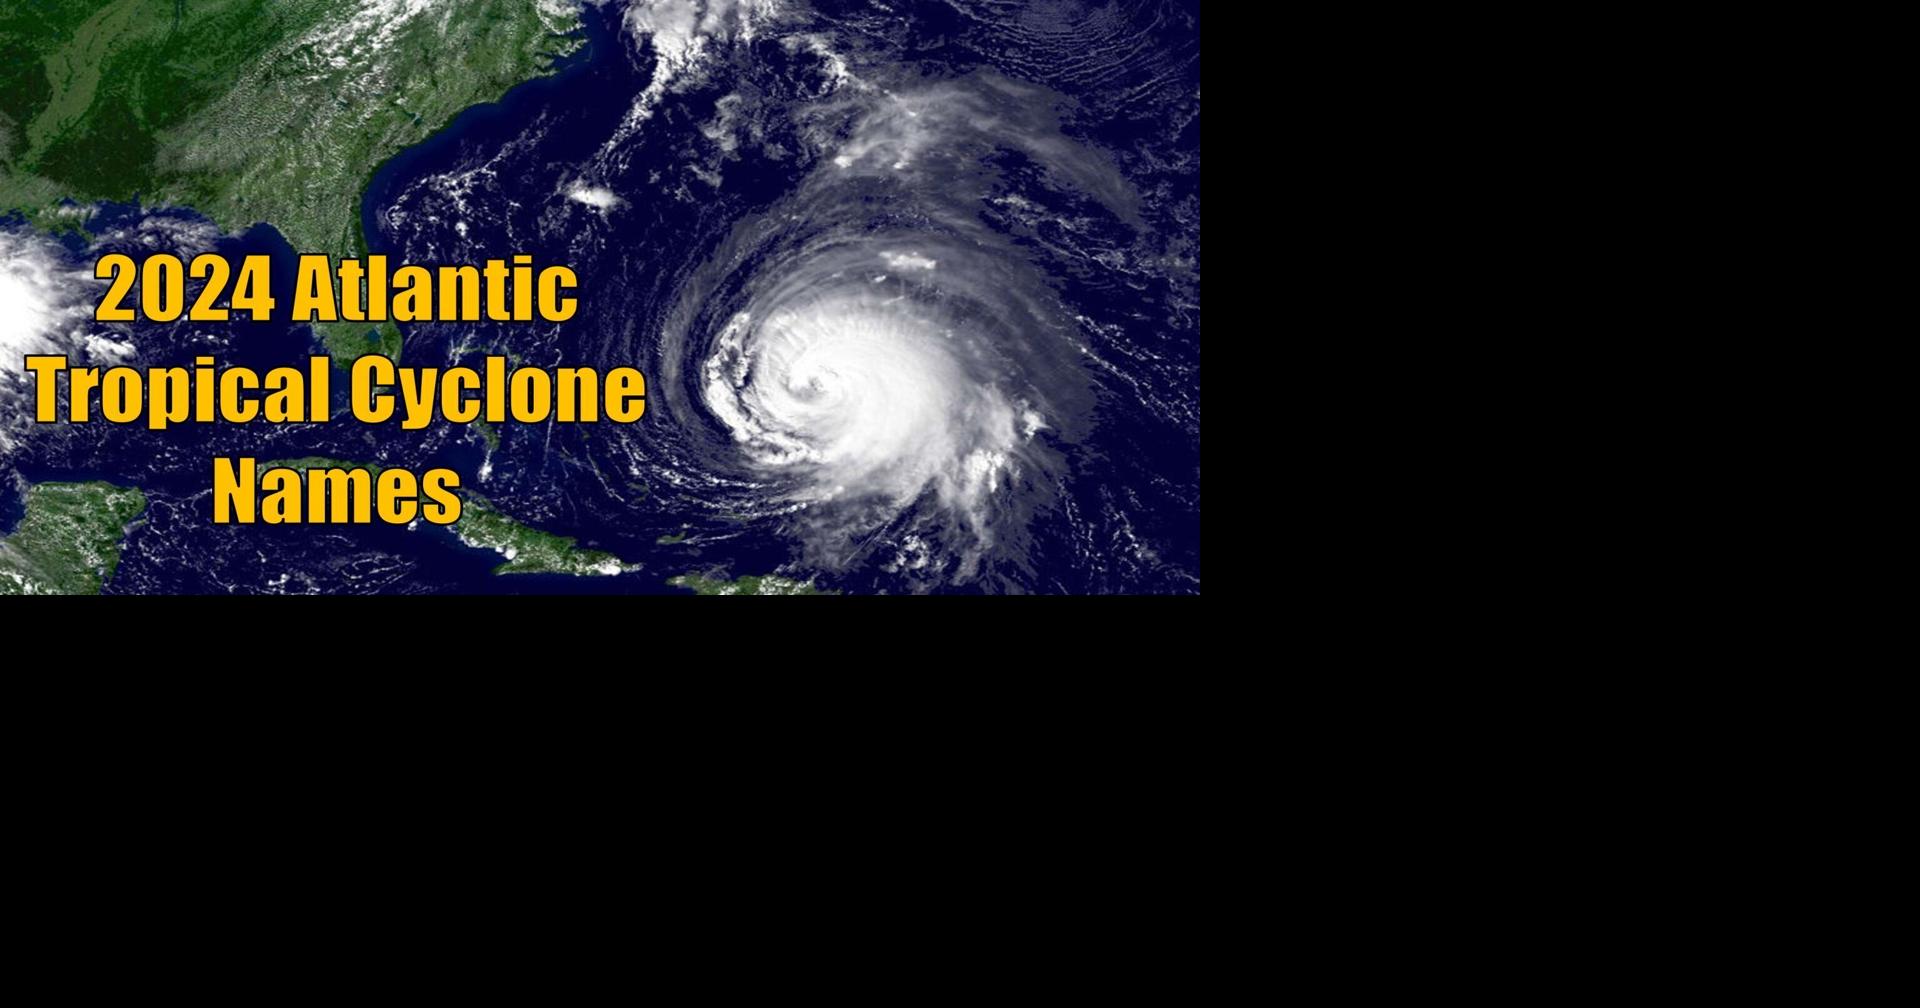 2024 Atlantic hurricane season names and forecast